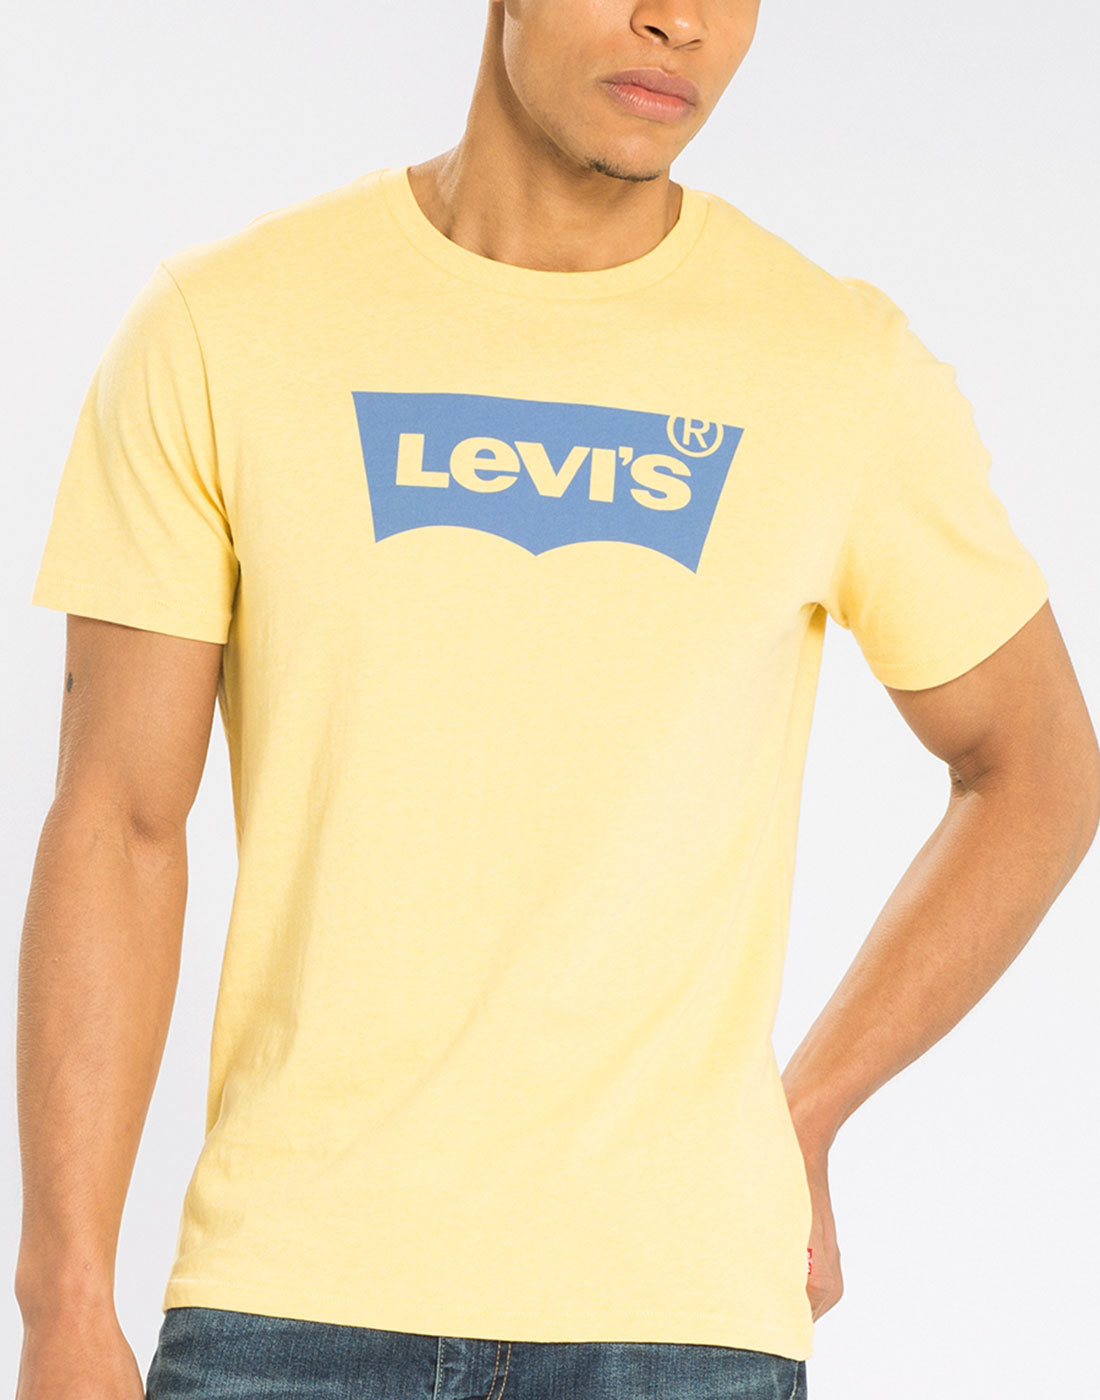 yellow levi shirt